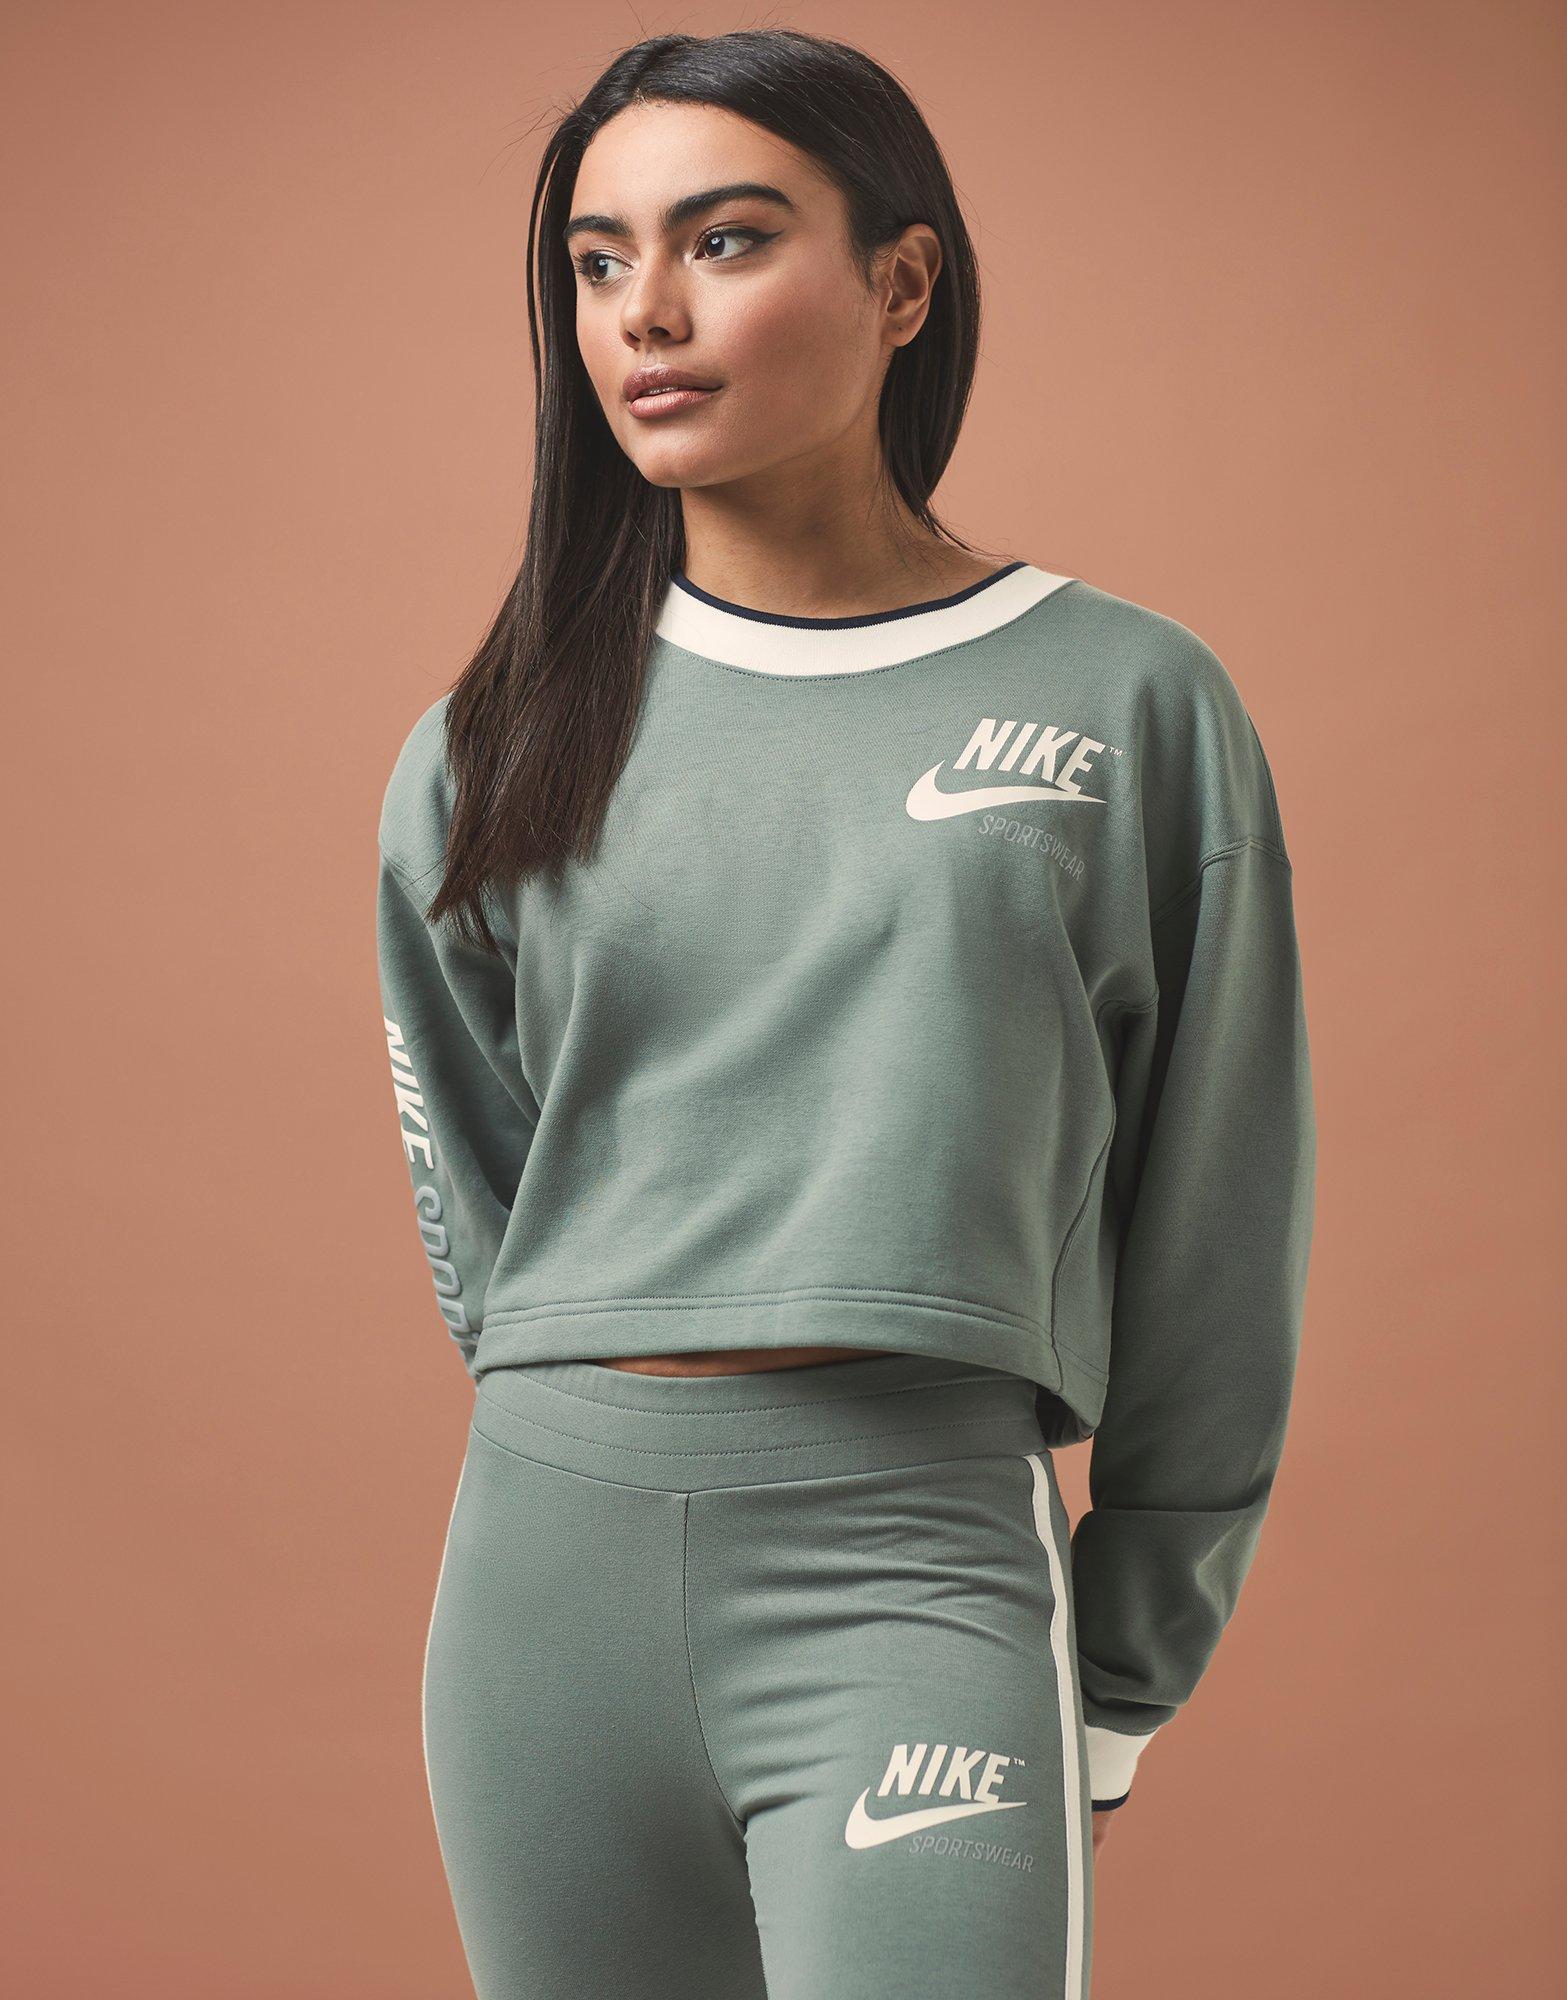 Nike Archive Reversible Sweatshirt Norway, SAVE 53% - mpgc.net